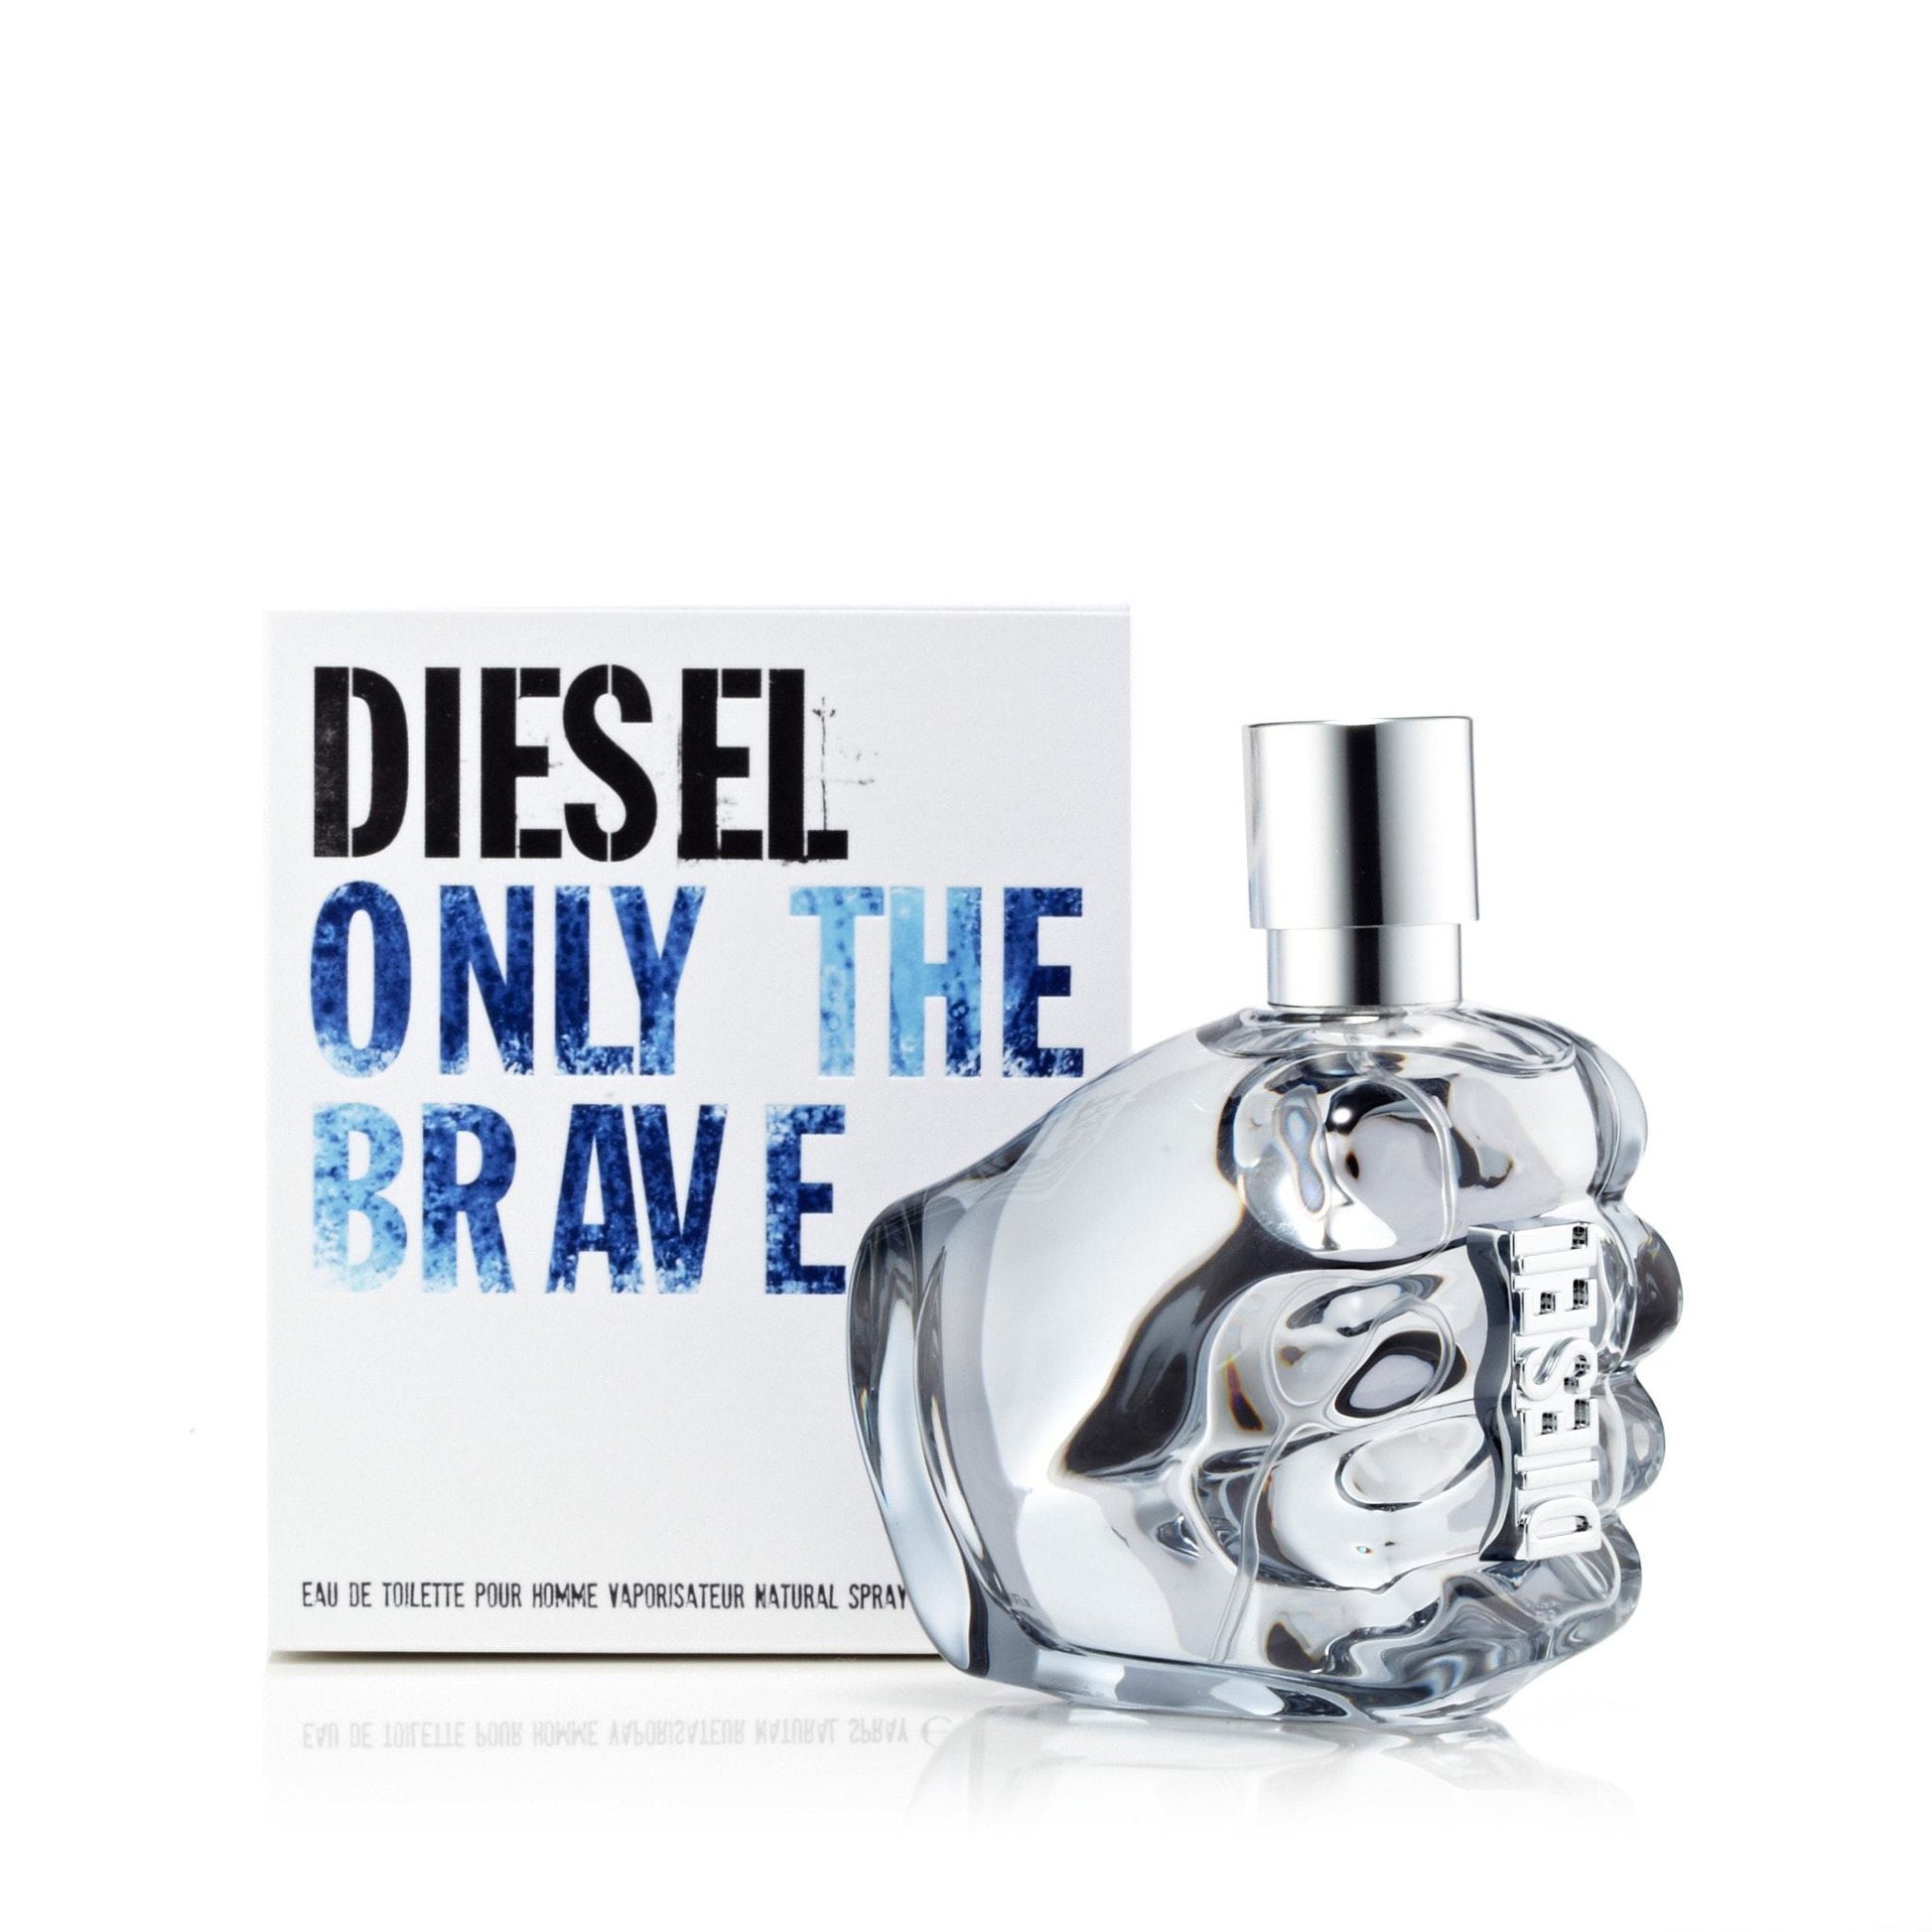 Only The Brave Eau de Toilette Spray for Men by Diesel, Product image 9